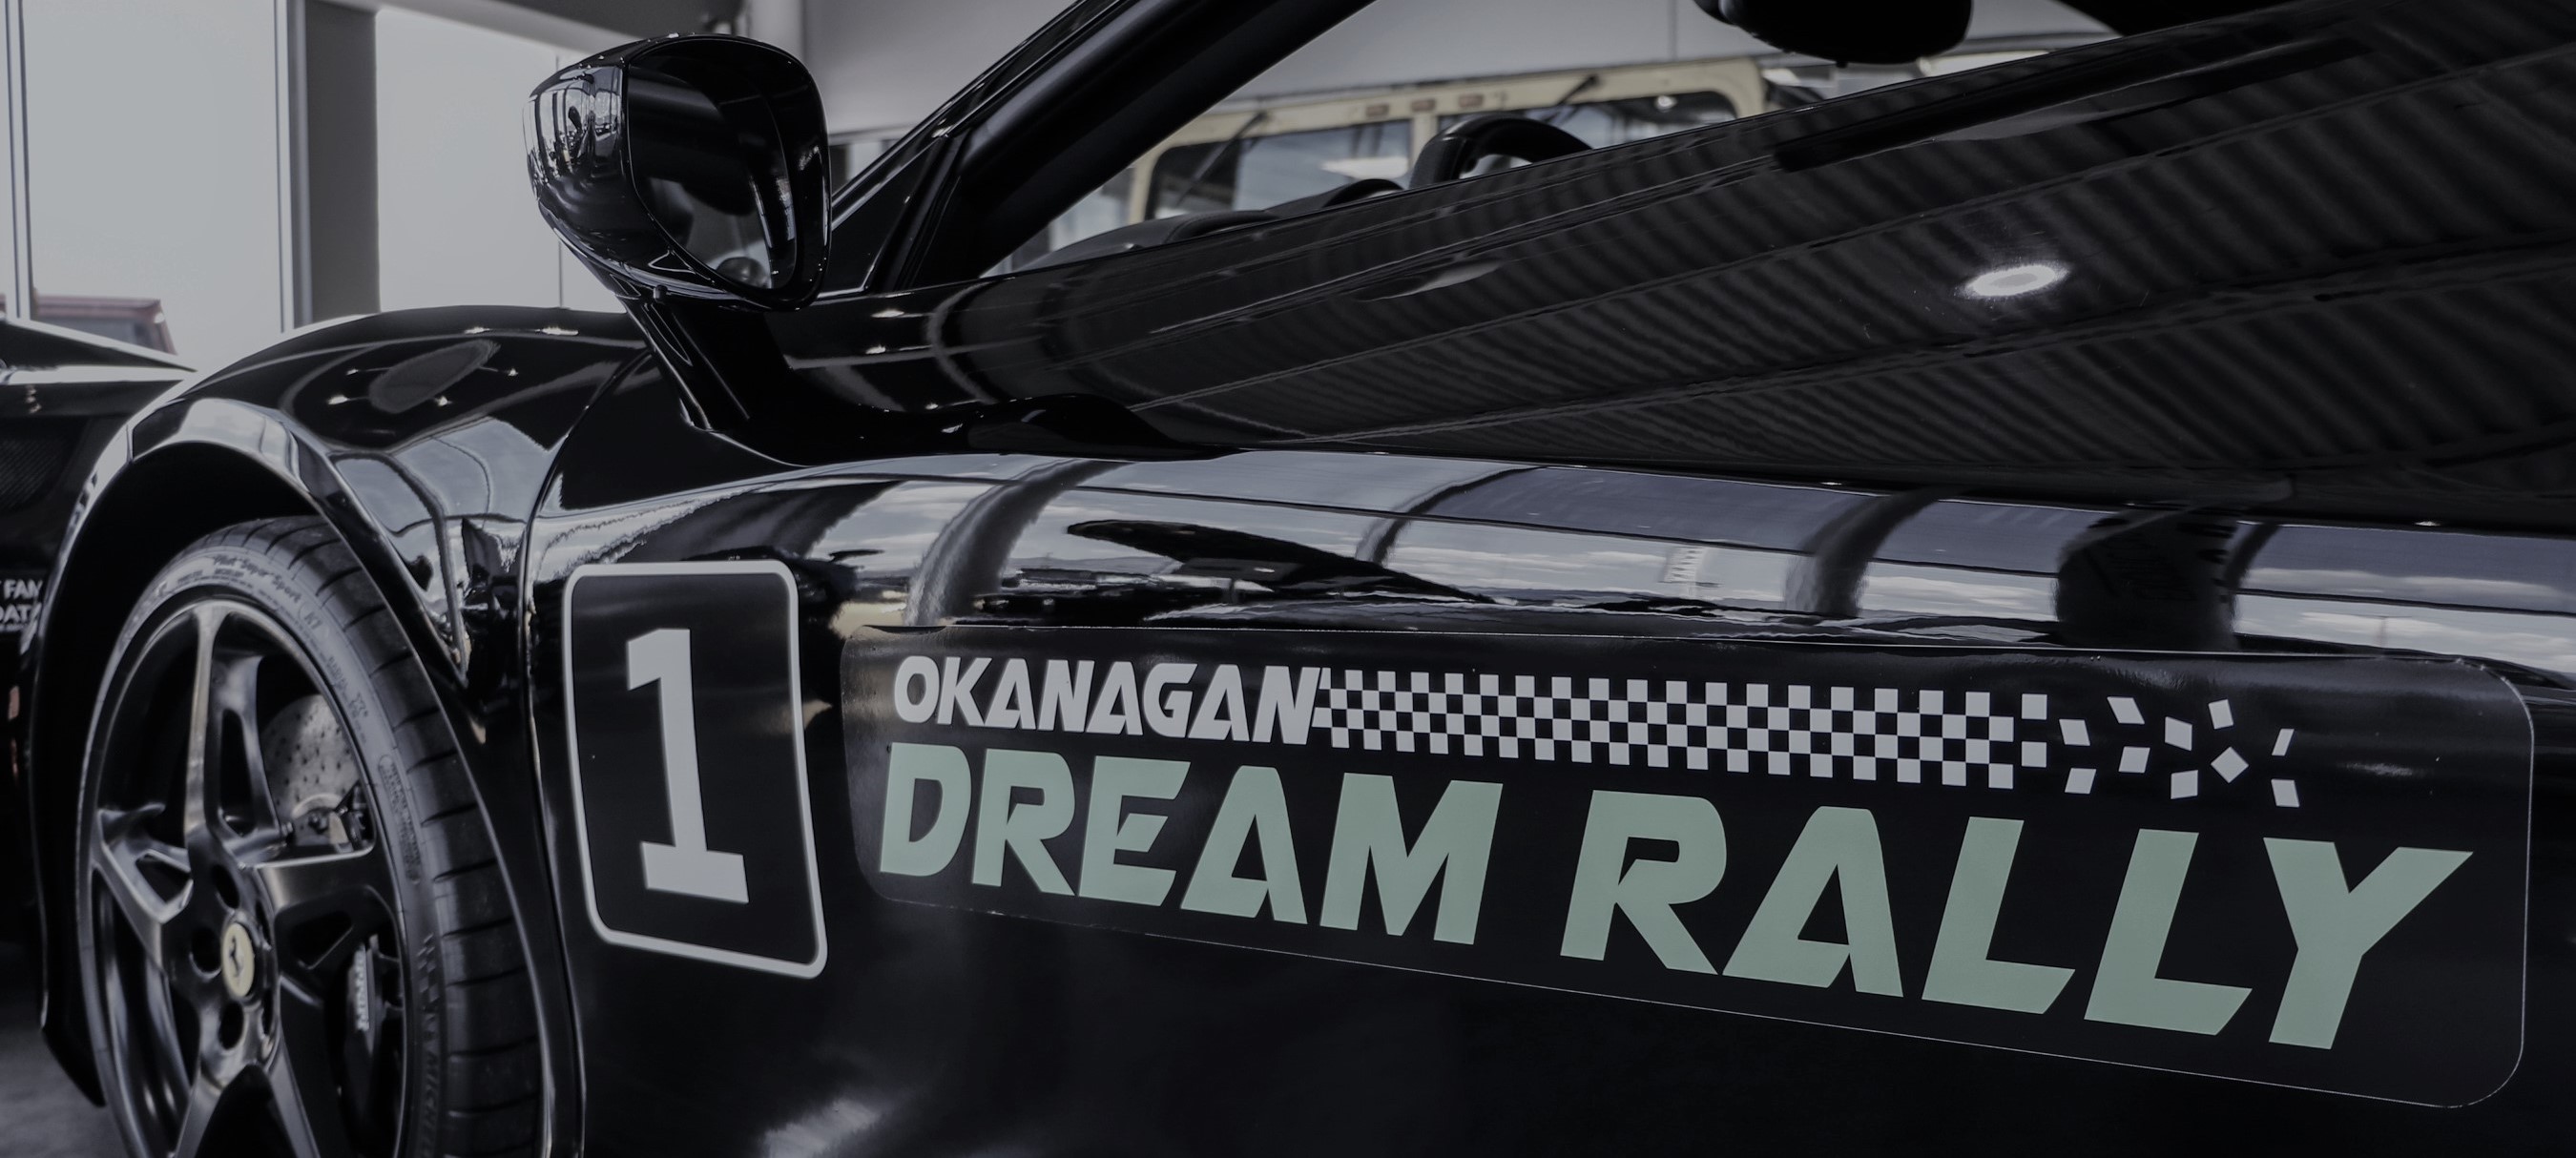 Okanagan dream rally at August Mazda in Kelowna